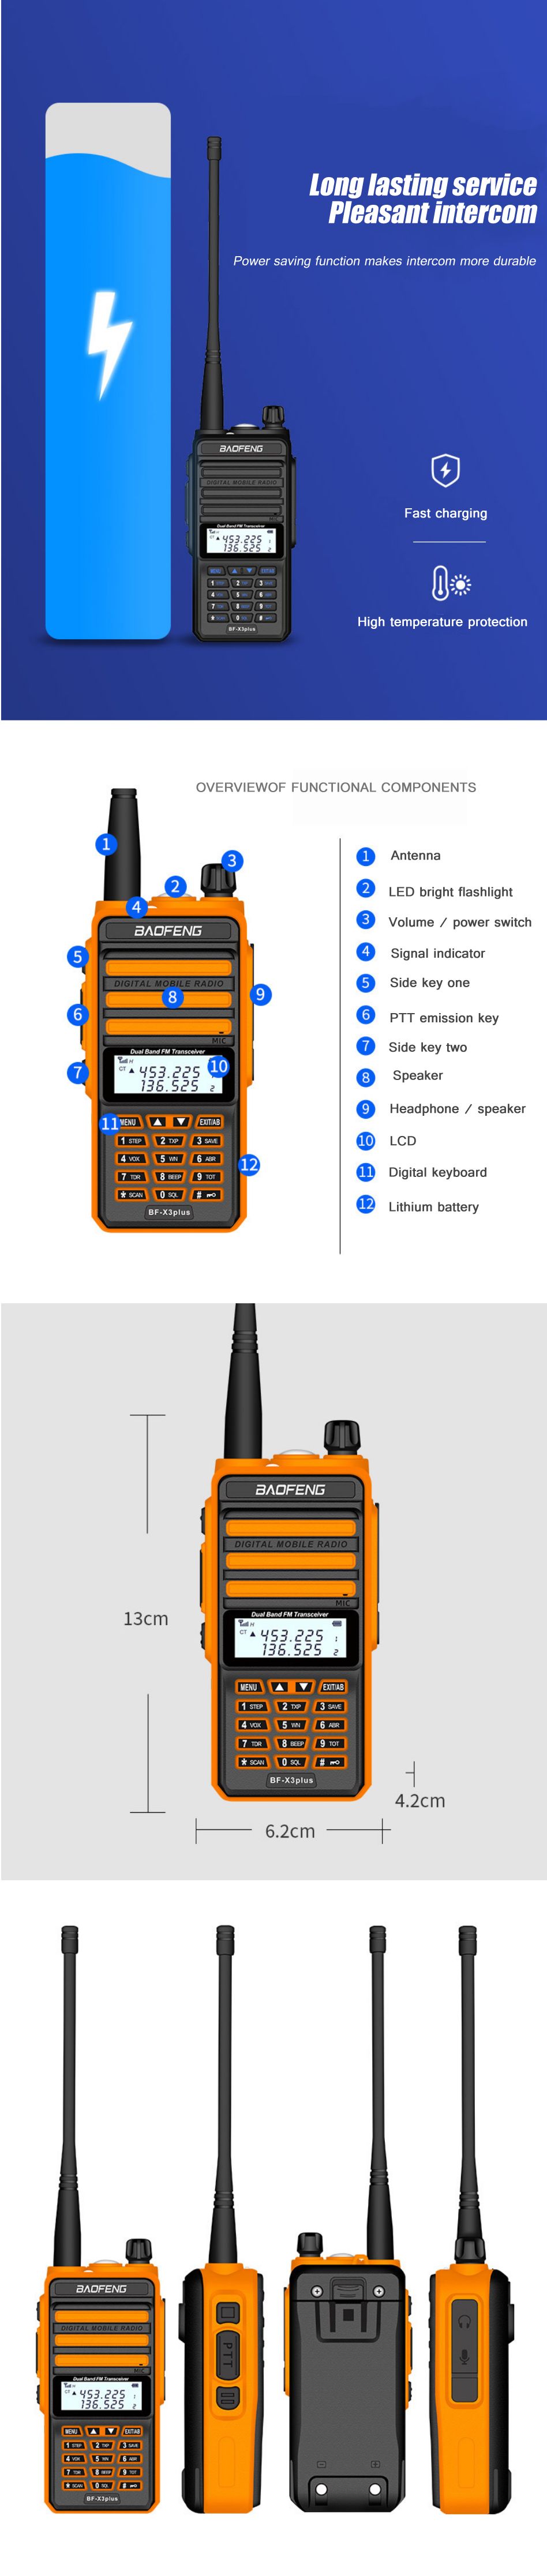 BAOFENG-X3-Plus-9500mah-18W-Tri-band-Radio-Walkie-Talkie-20-KM-Waterproof-UHFVHF-Transceiver-220MHz--1739568